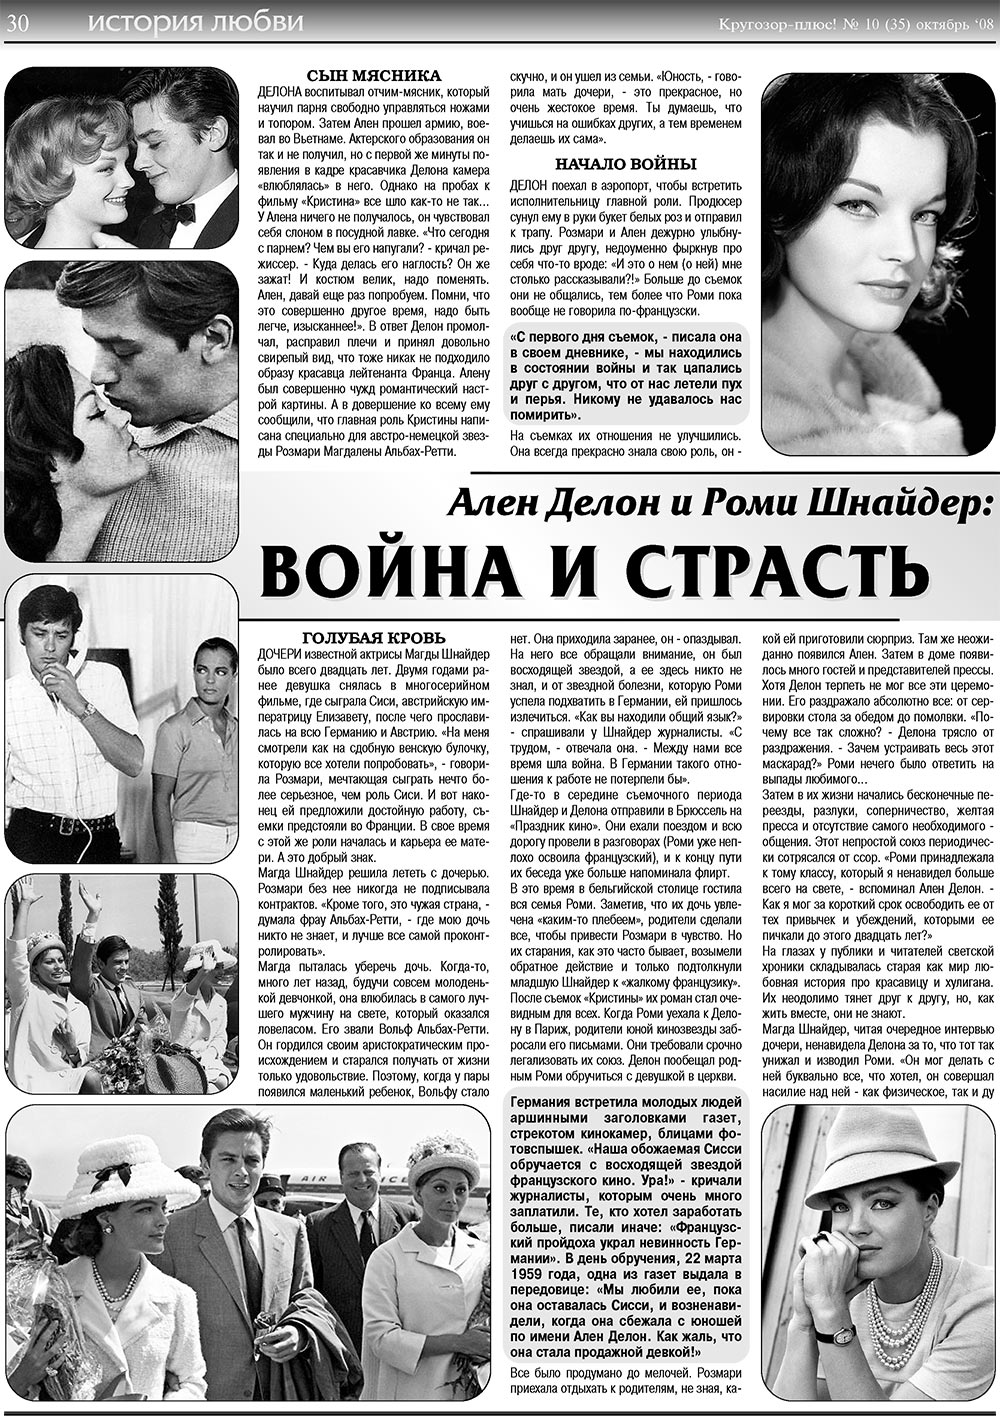 Кругозор плюс! (газета). 2008 год, номер 10, стр. 30